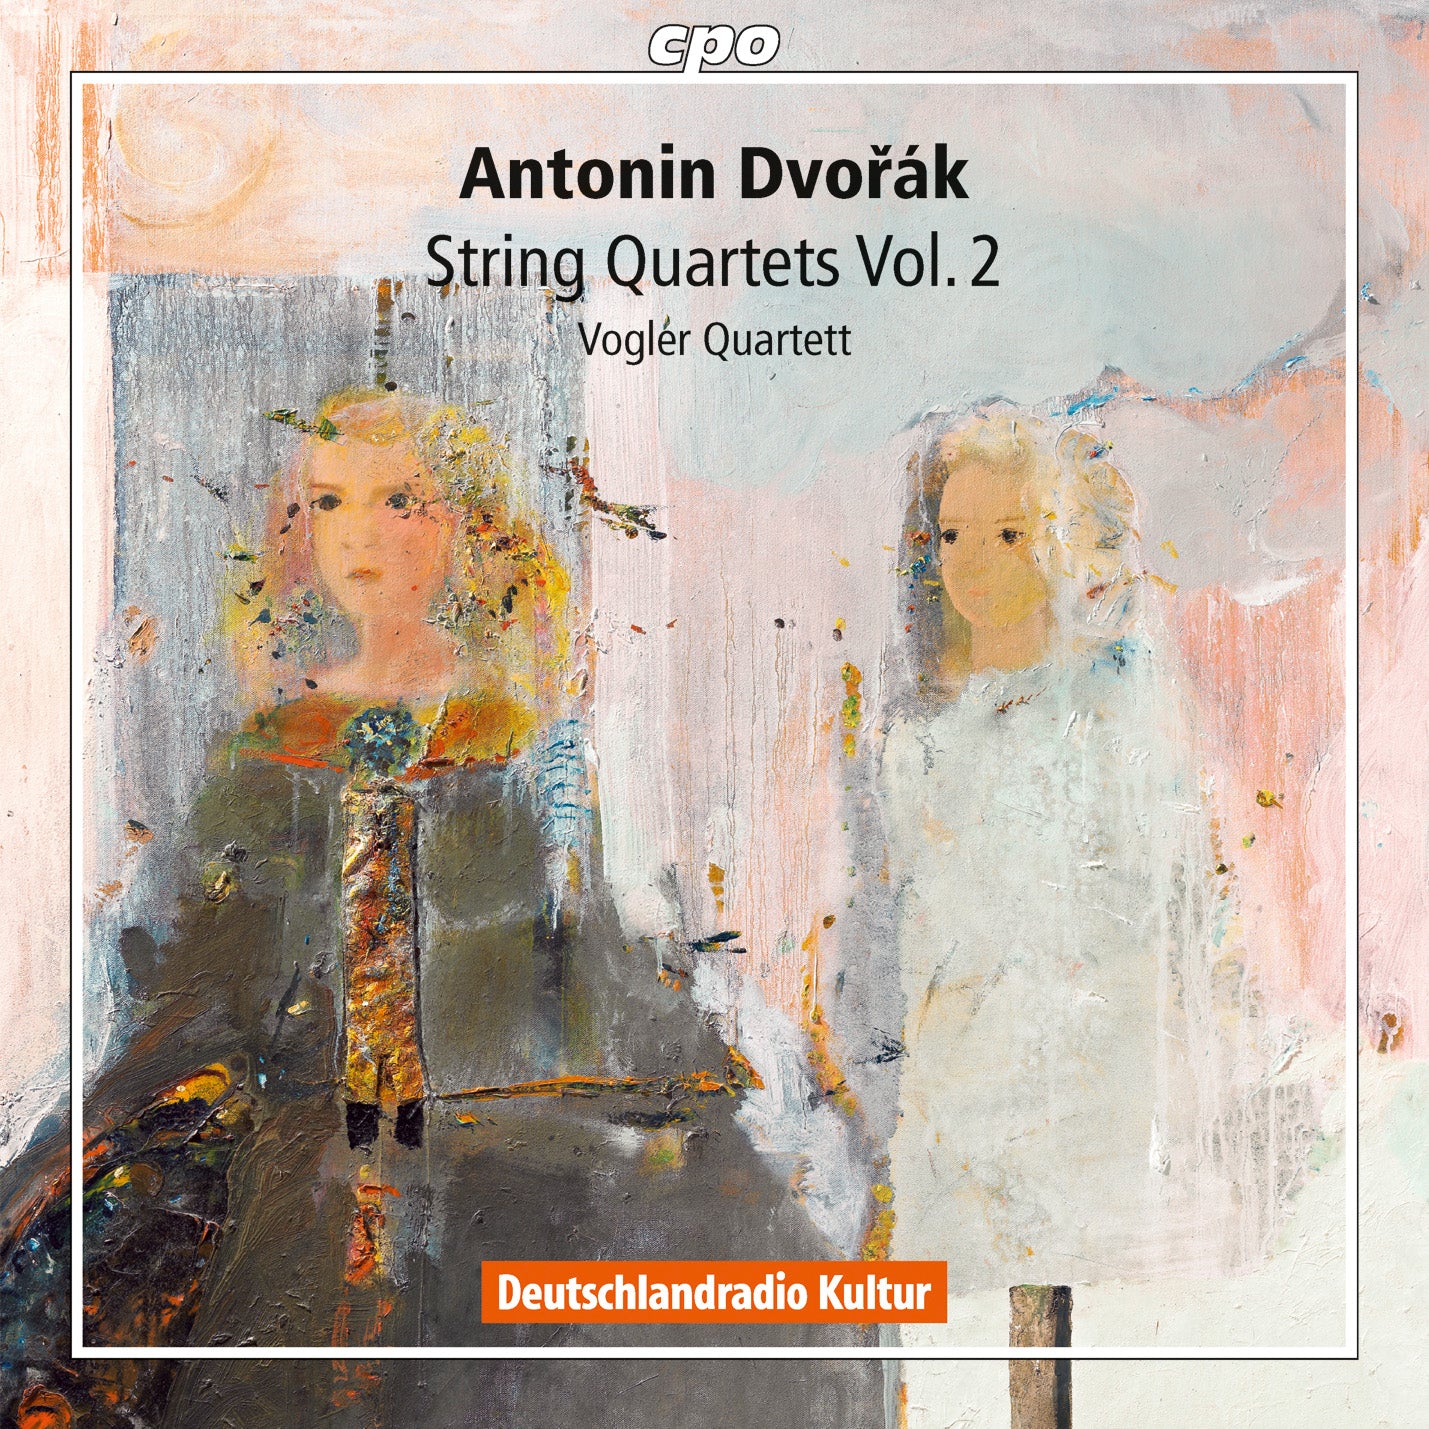 Dvorák: String Quartets, Vol. 2 / Vogler Quartet